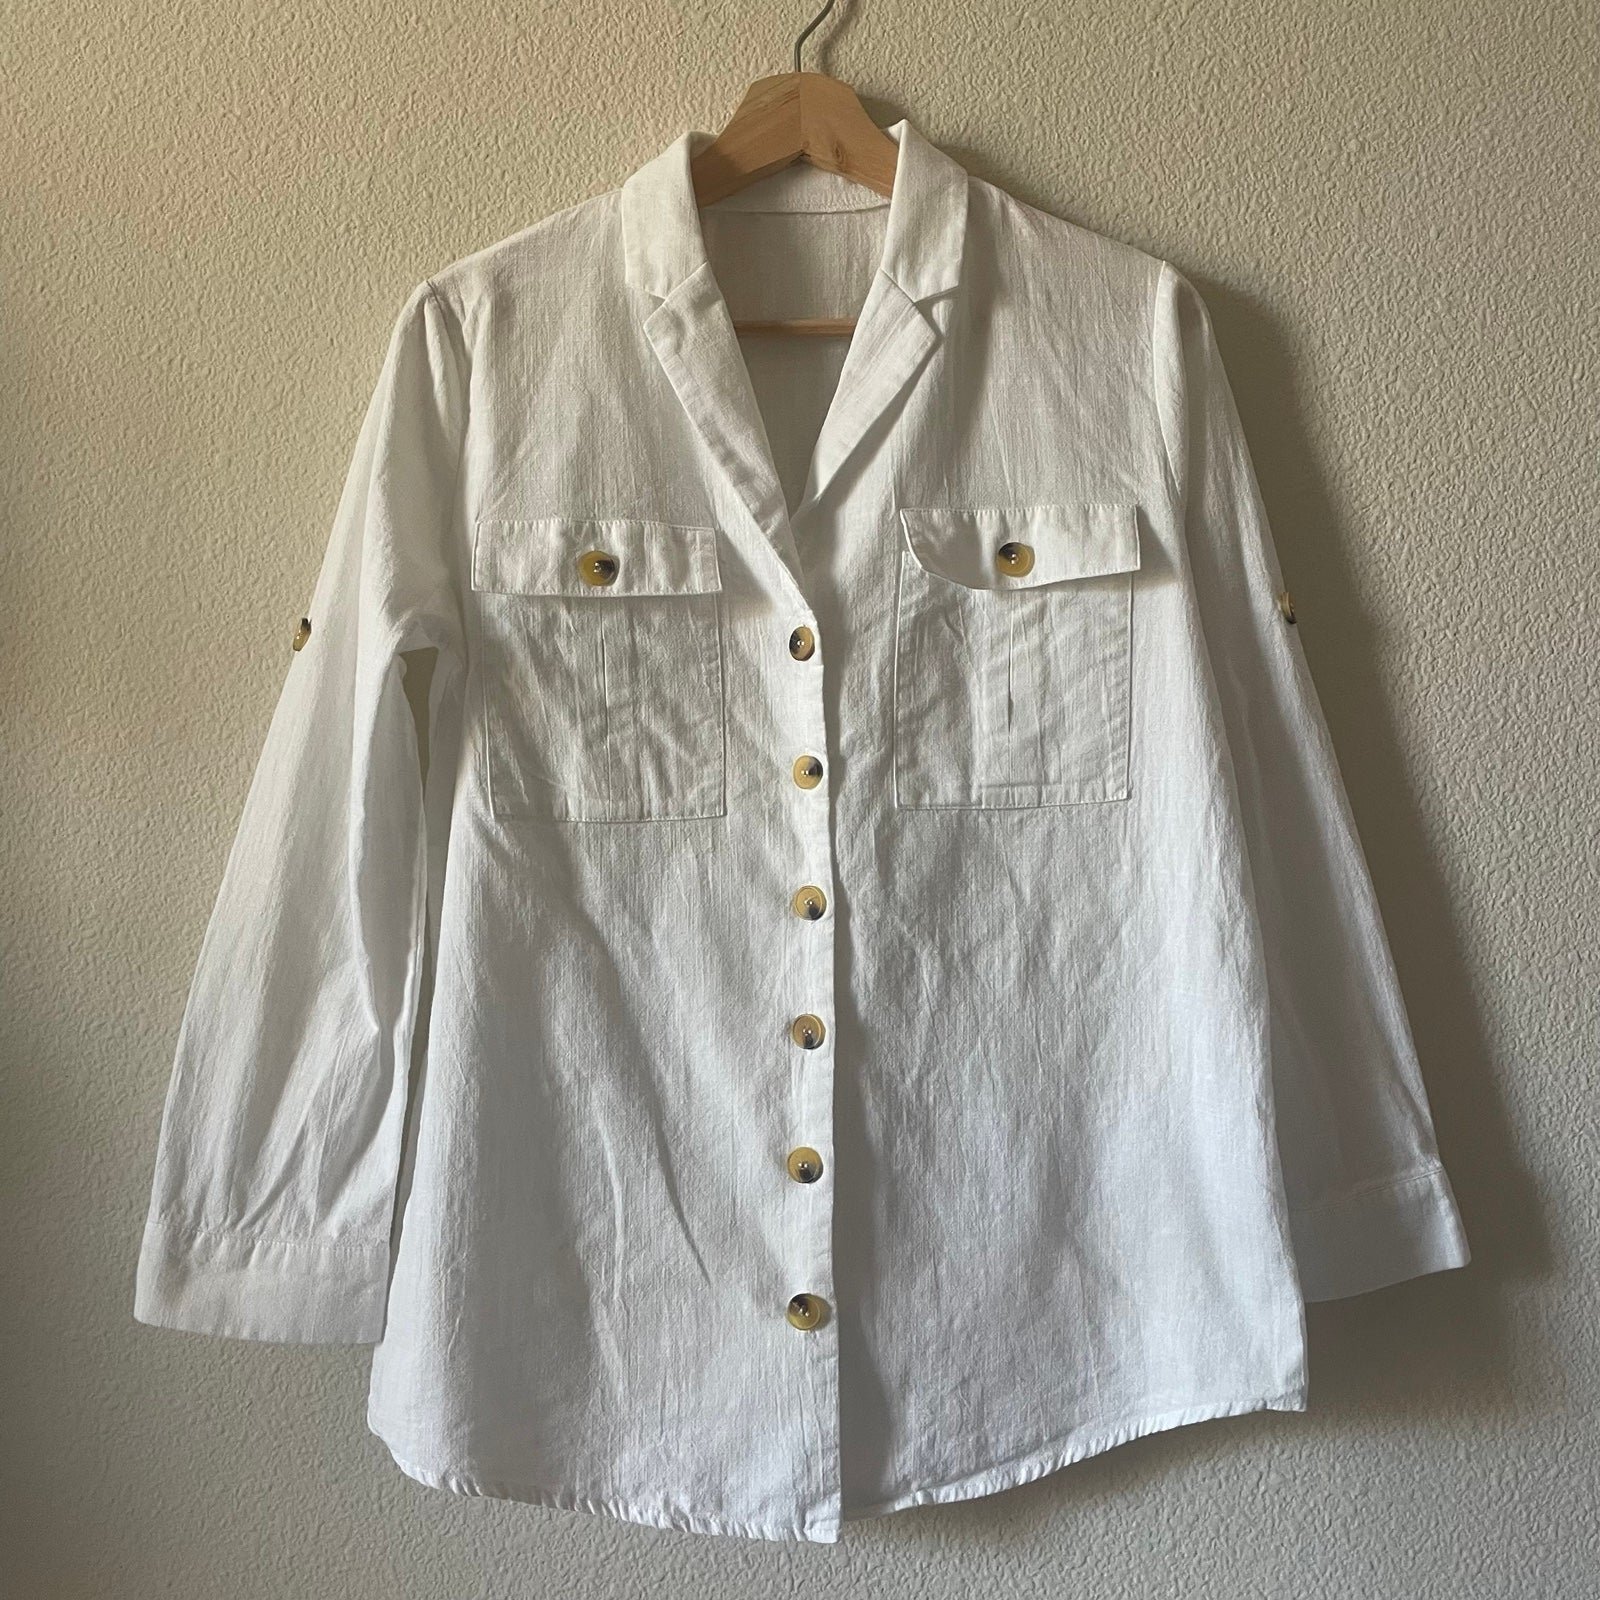 Perfect White cotton button up shirt ONURDAwOS High Qua